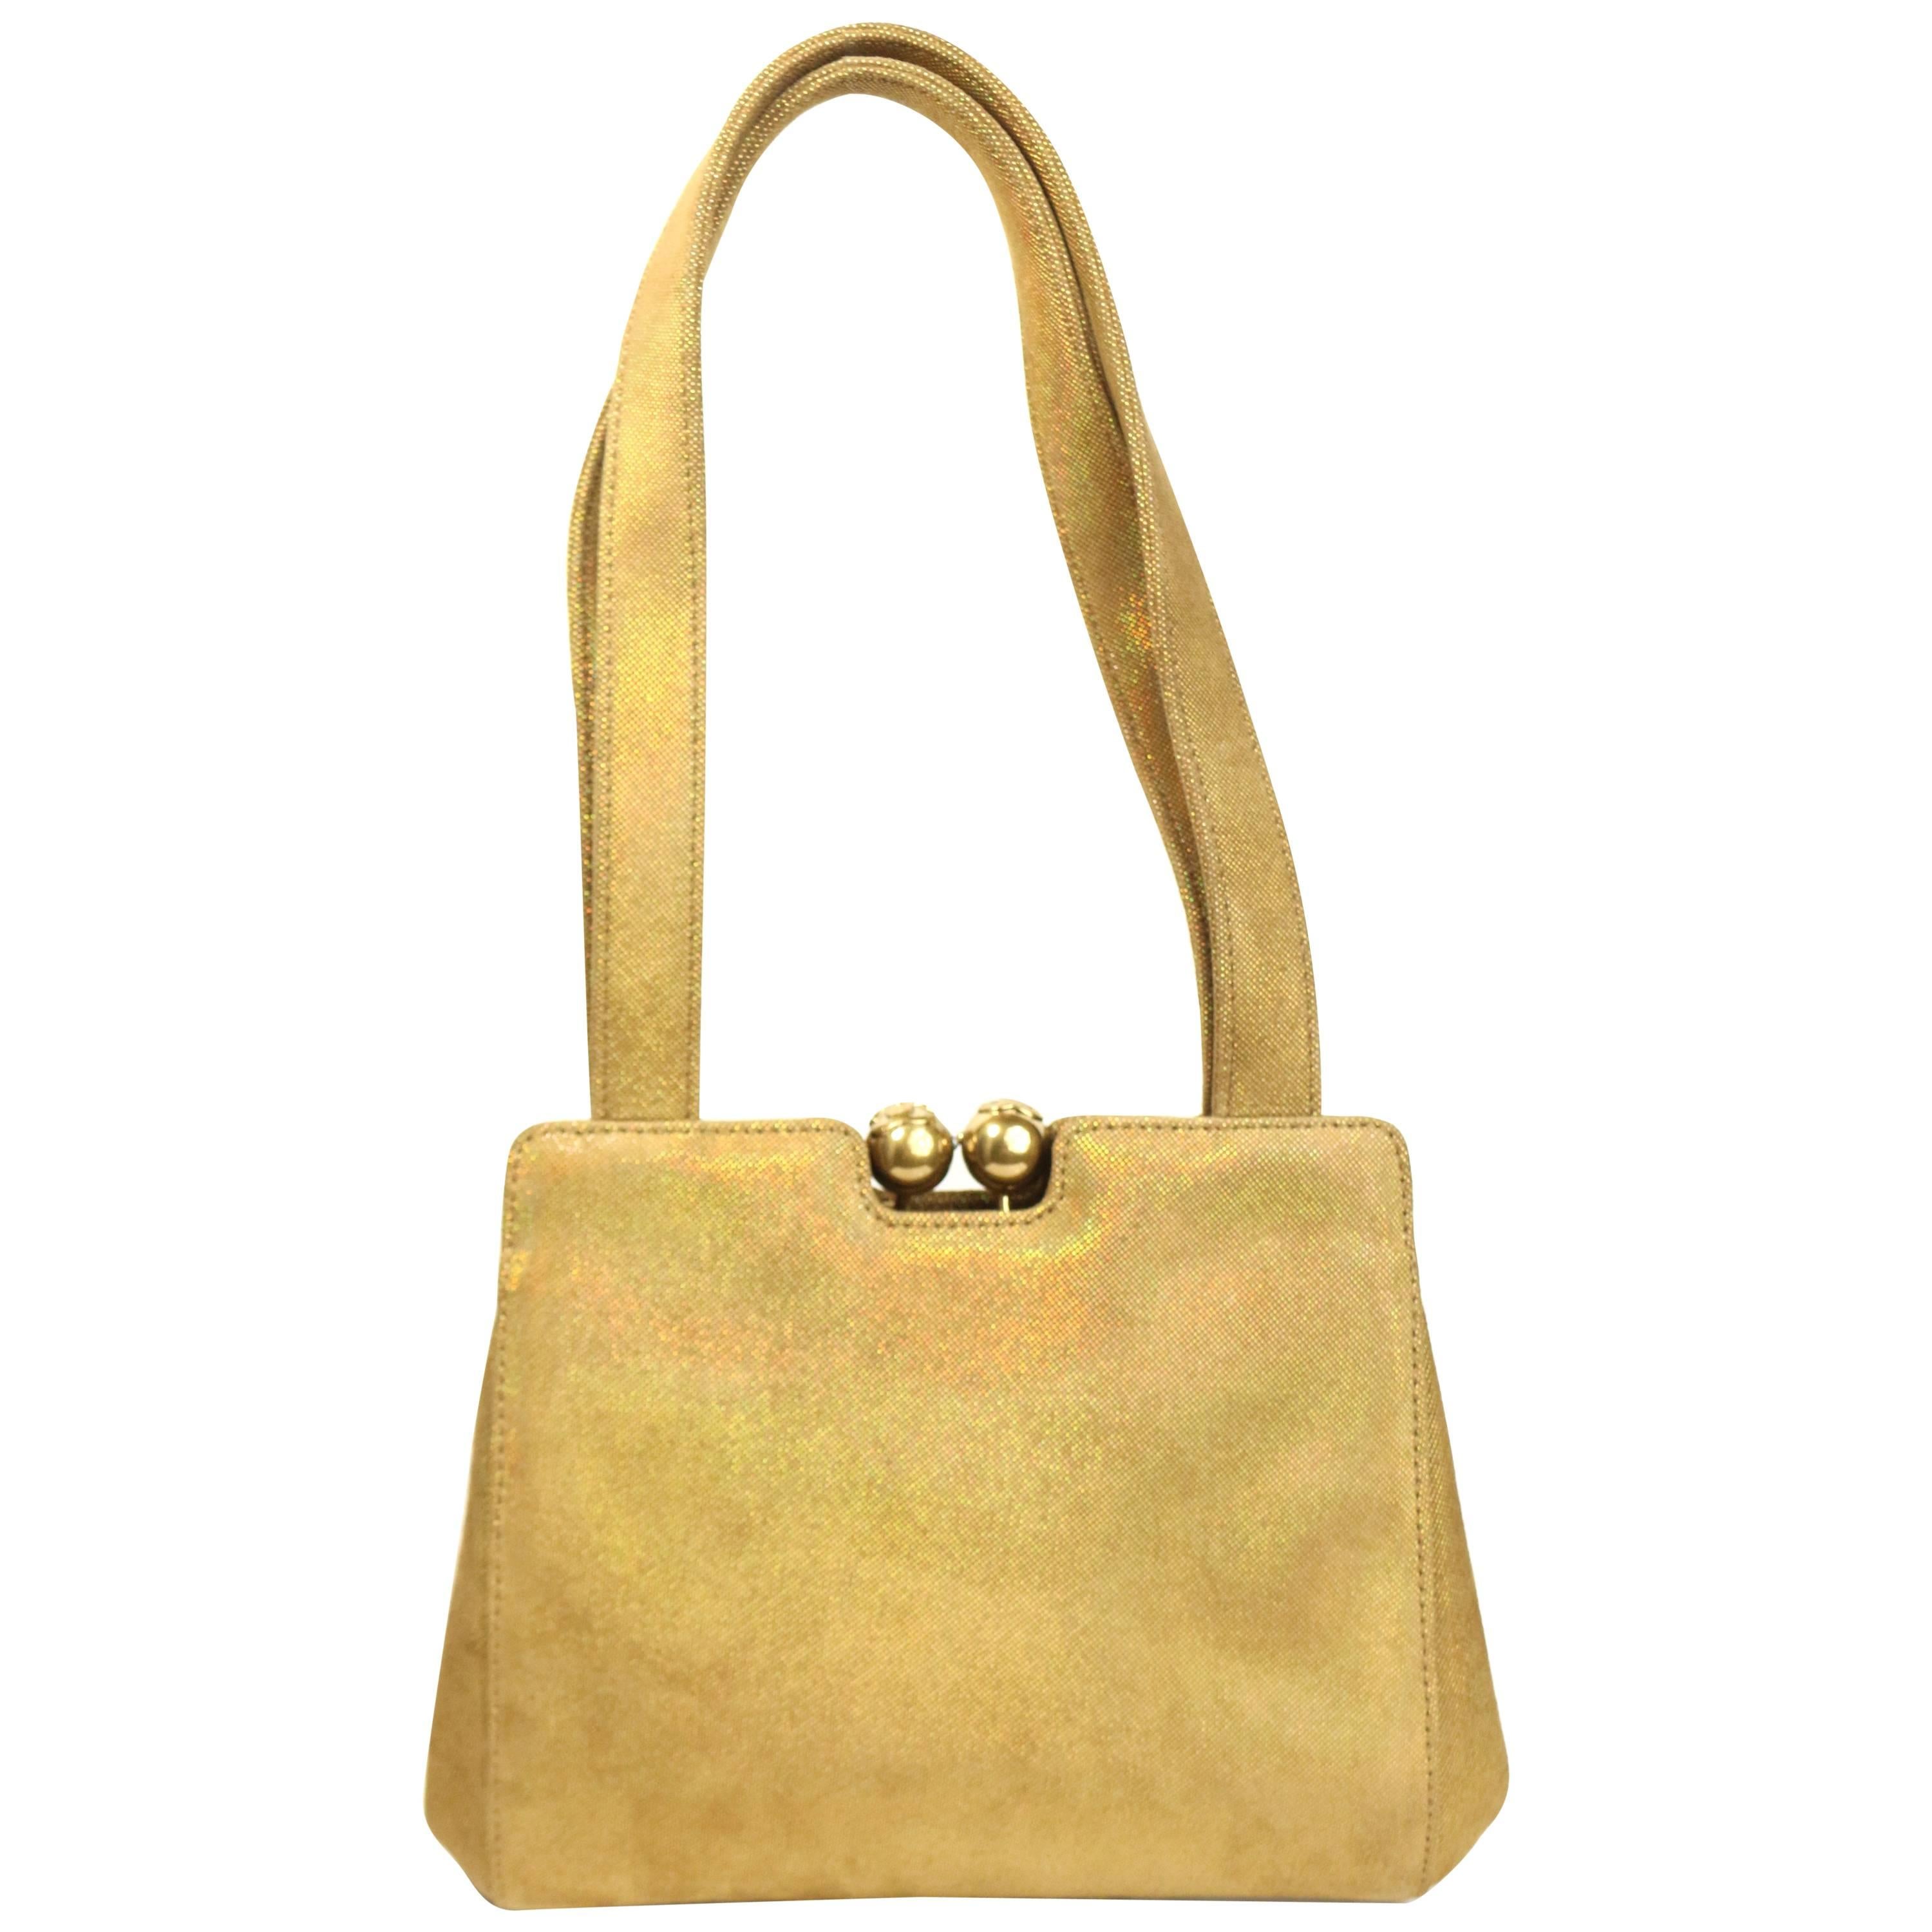 Chanel Gold Metallic Suede Small Handbag 